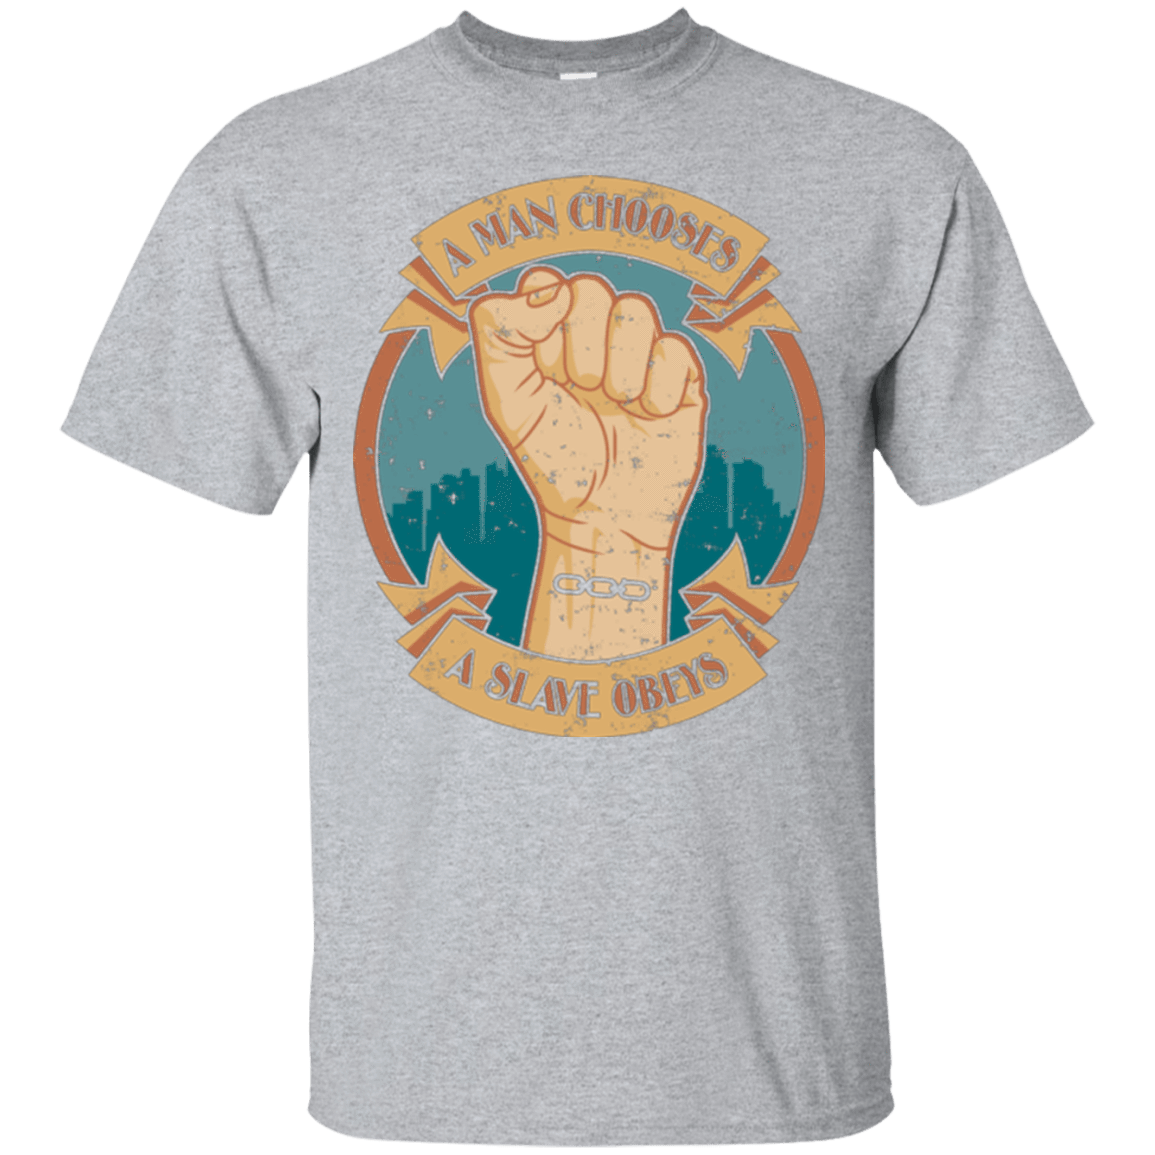 T-Shirts Sport Grey / Small A Man Chooses A Slave Obeys T-Shirt